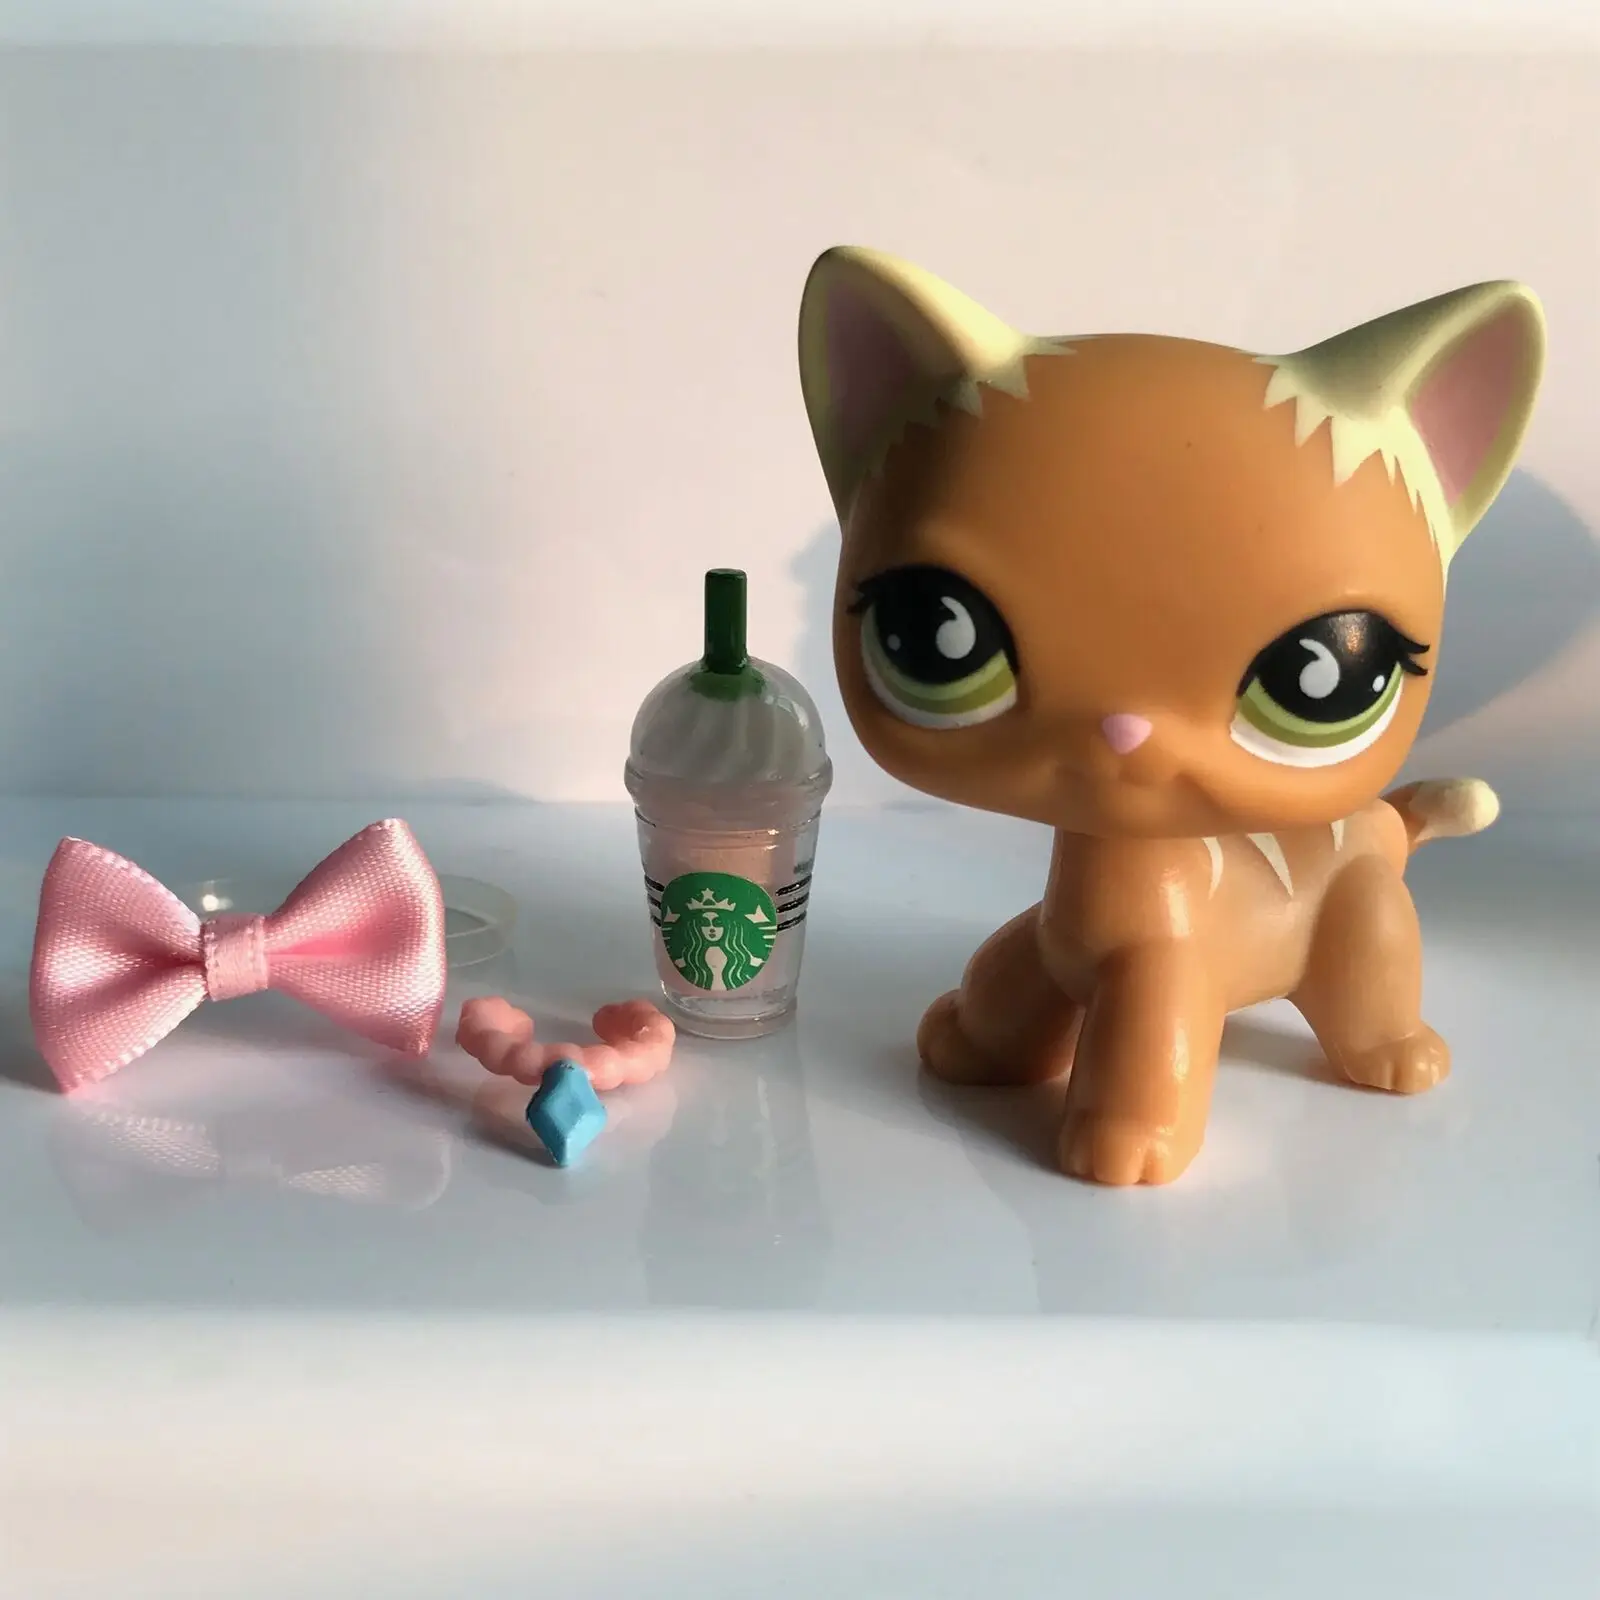 Pet Short Hair Cat #525 Toys Orange Green Eyes Cream Ear Kitty Kids Gift + MINI Accessories | Игрушки и хобби